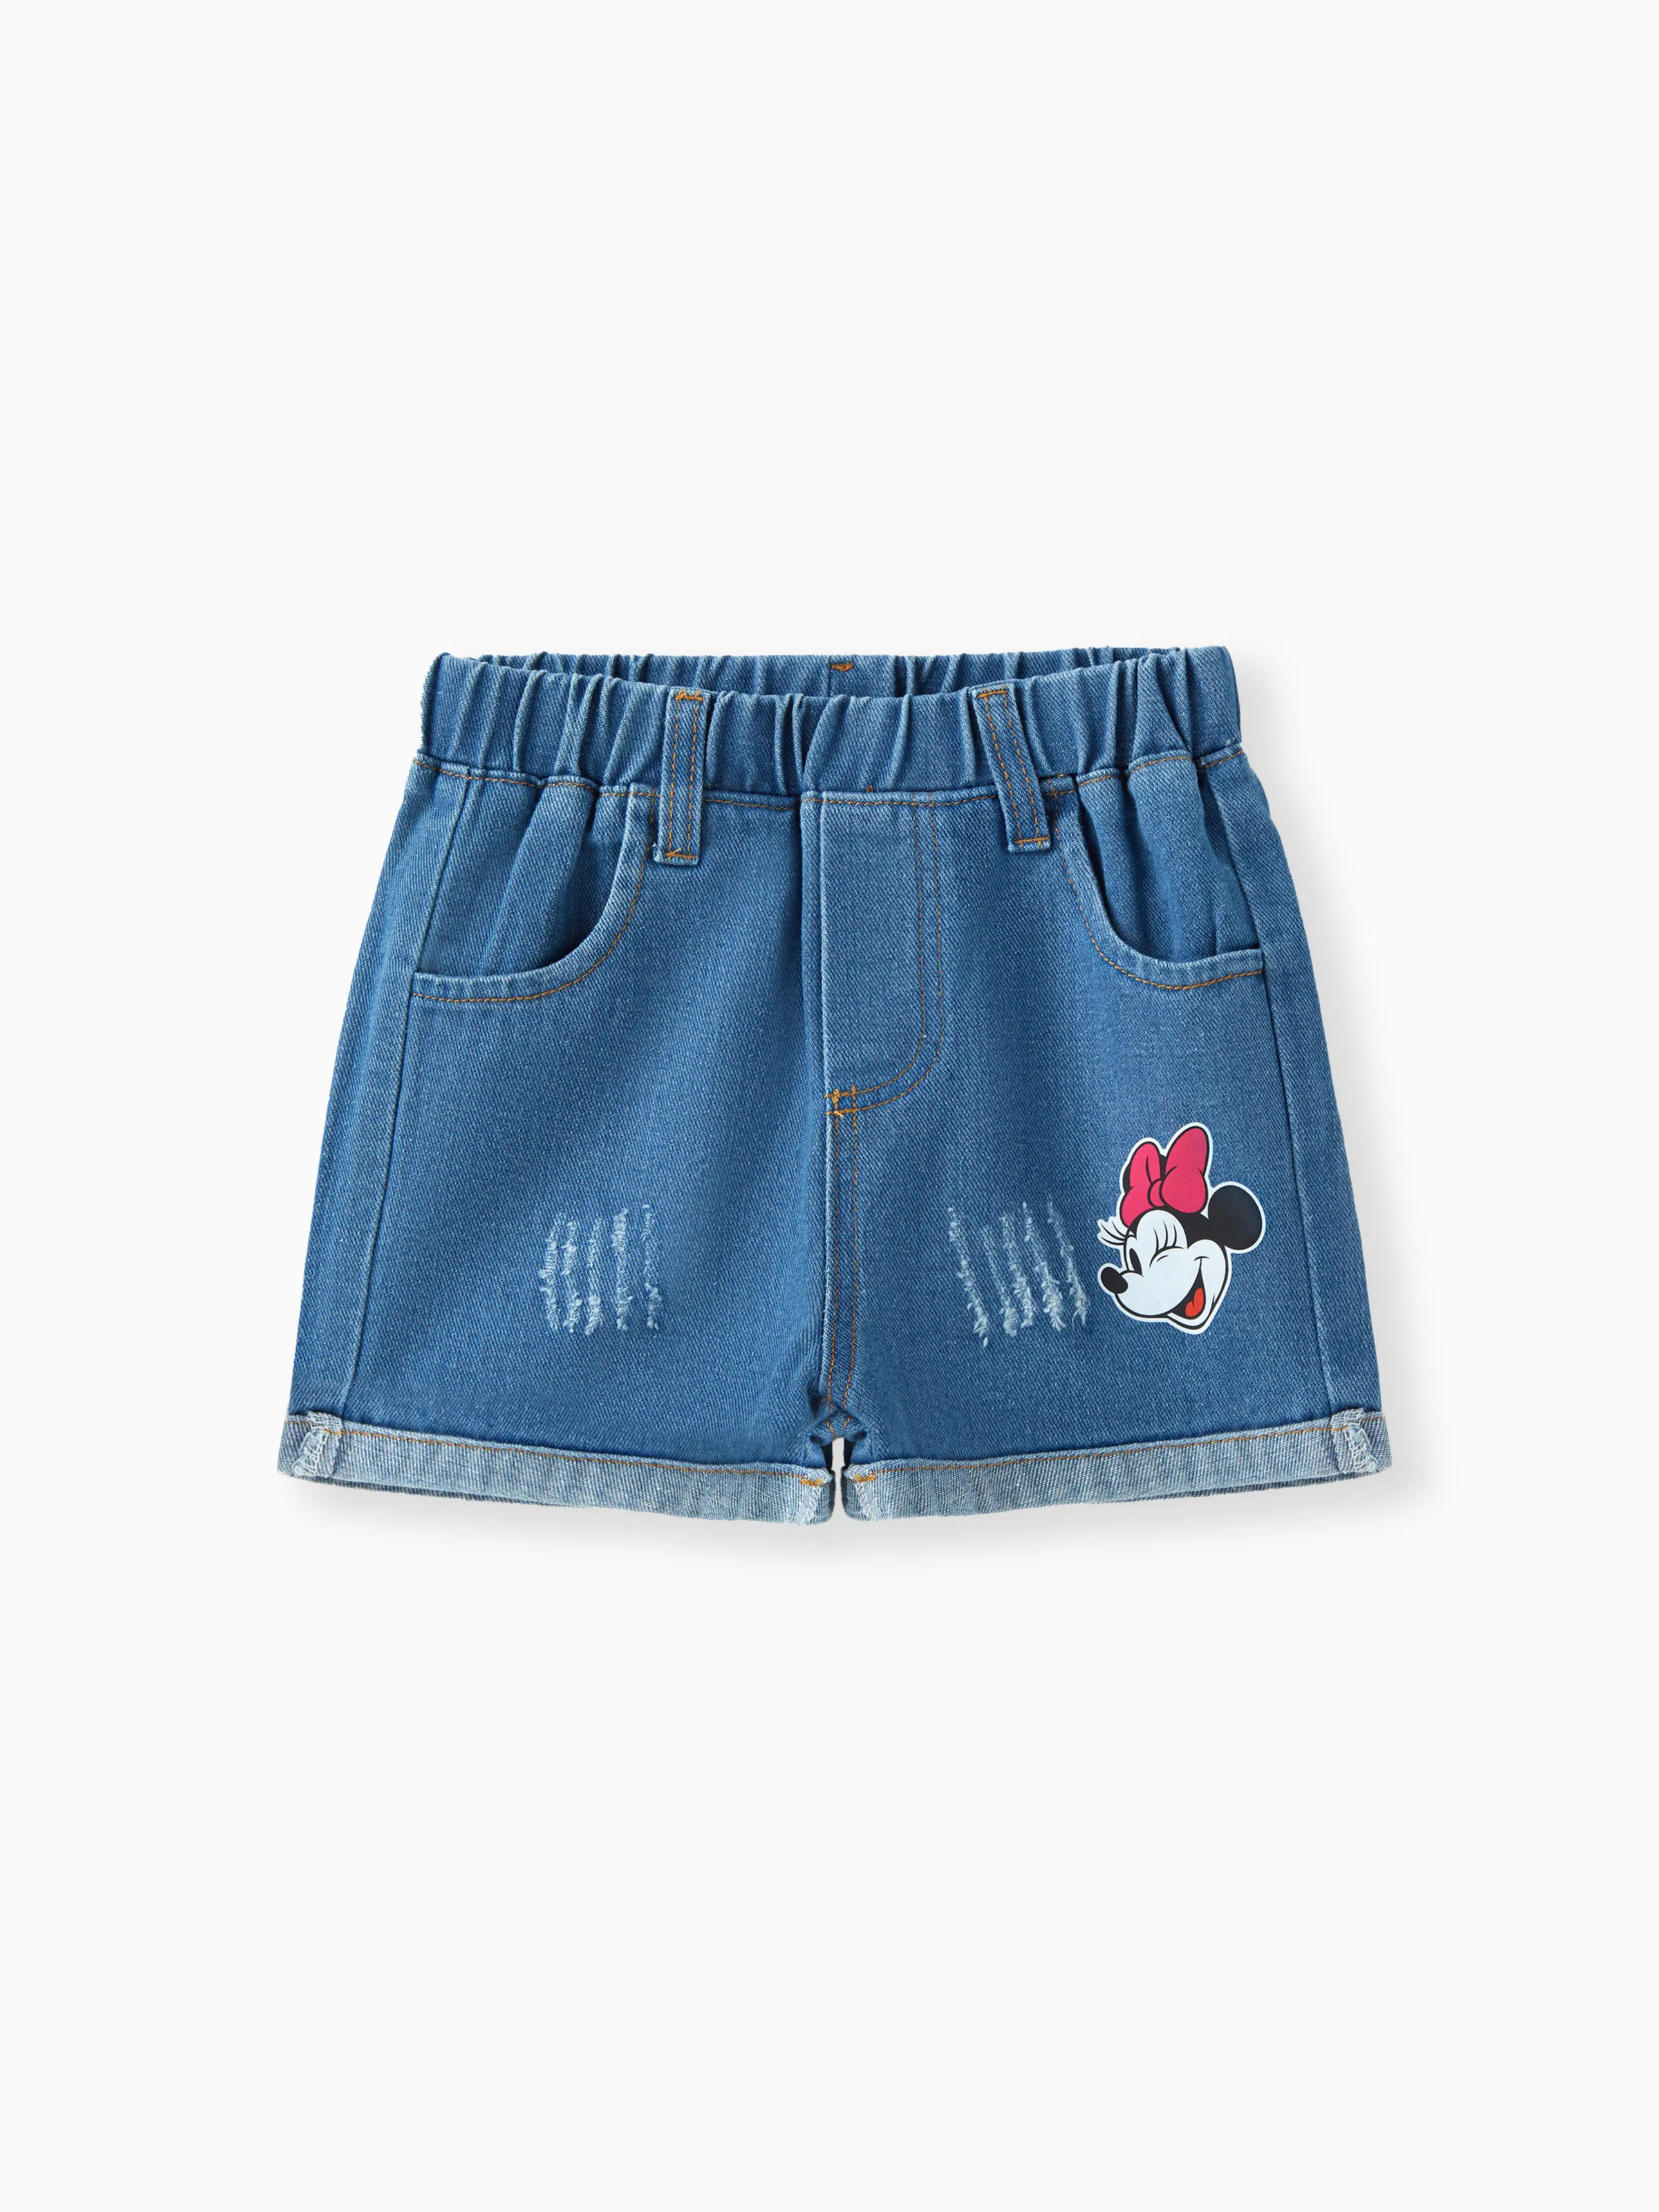 

Disney Mickey and Friends Toddler Girl /Toddler Boy printed denim shorts